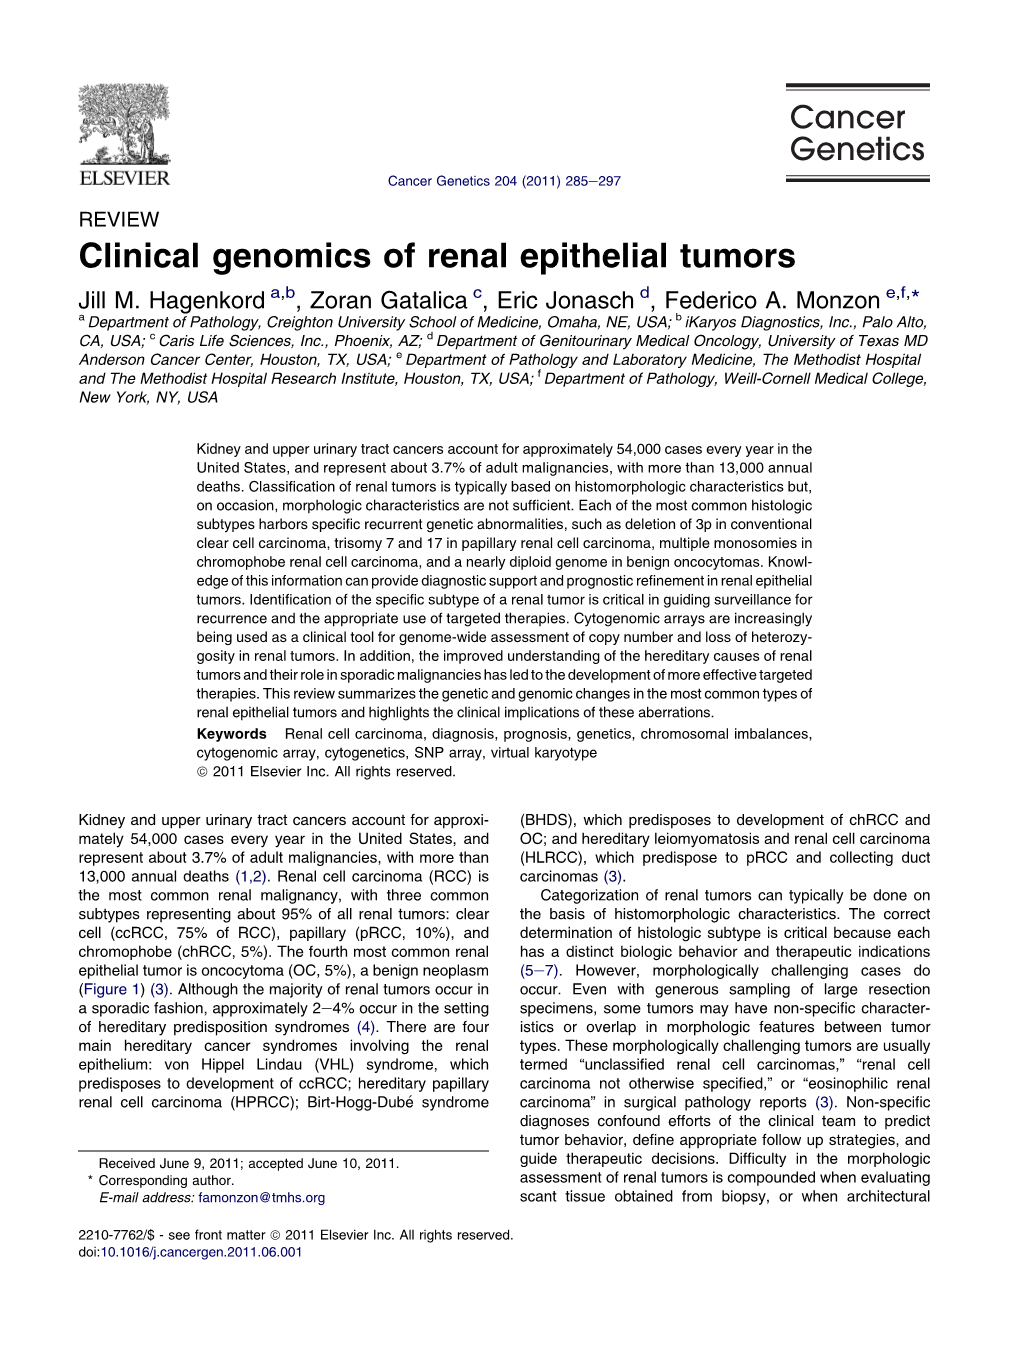 Clinical Genomics of Renal Epithelial Tumors Jill M